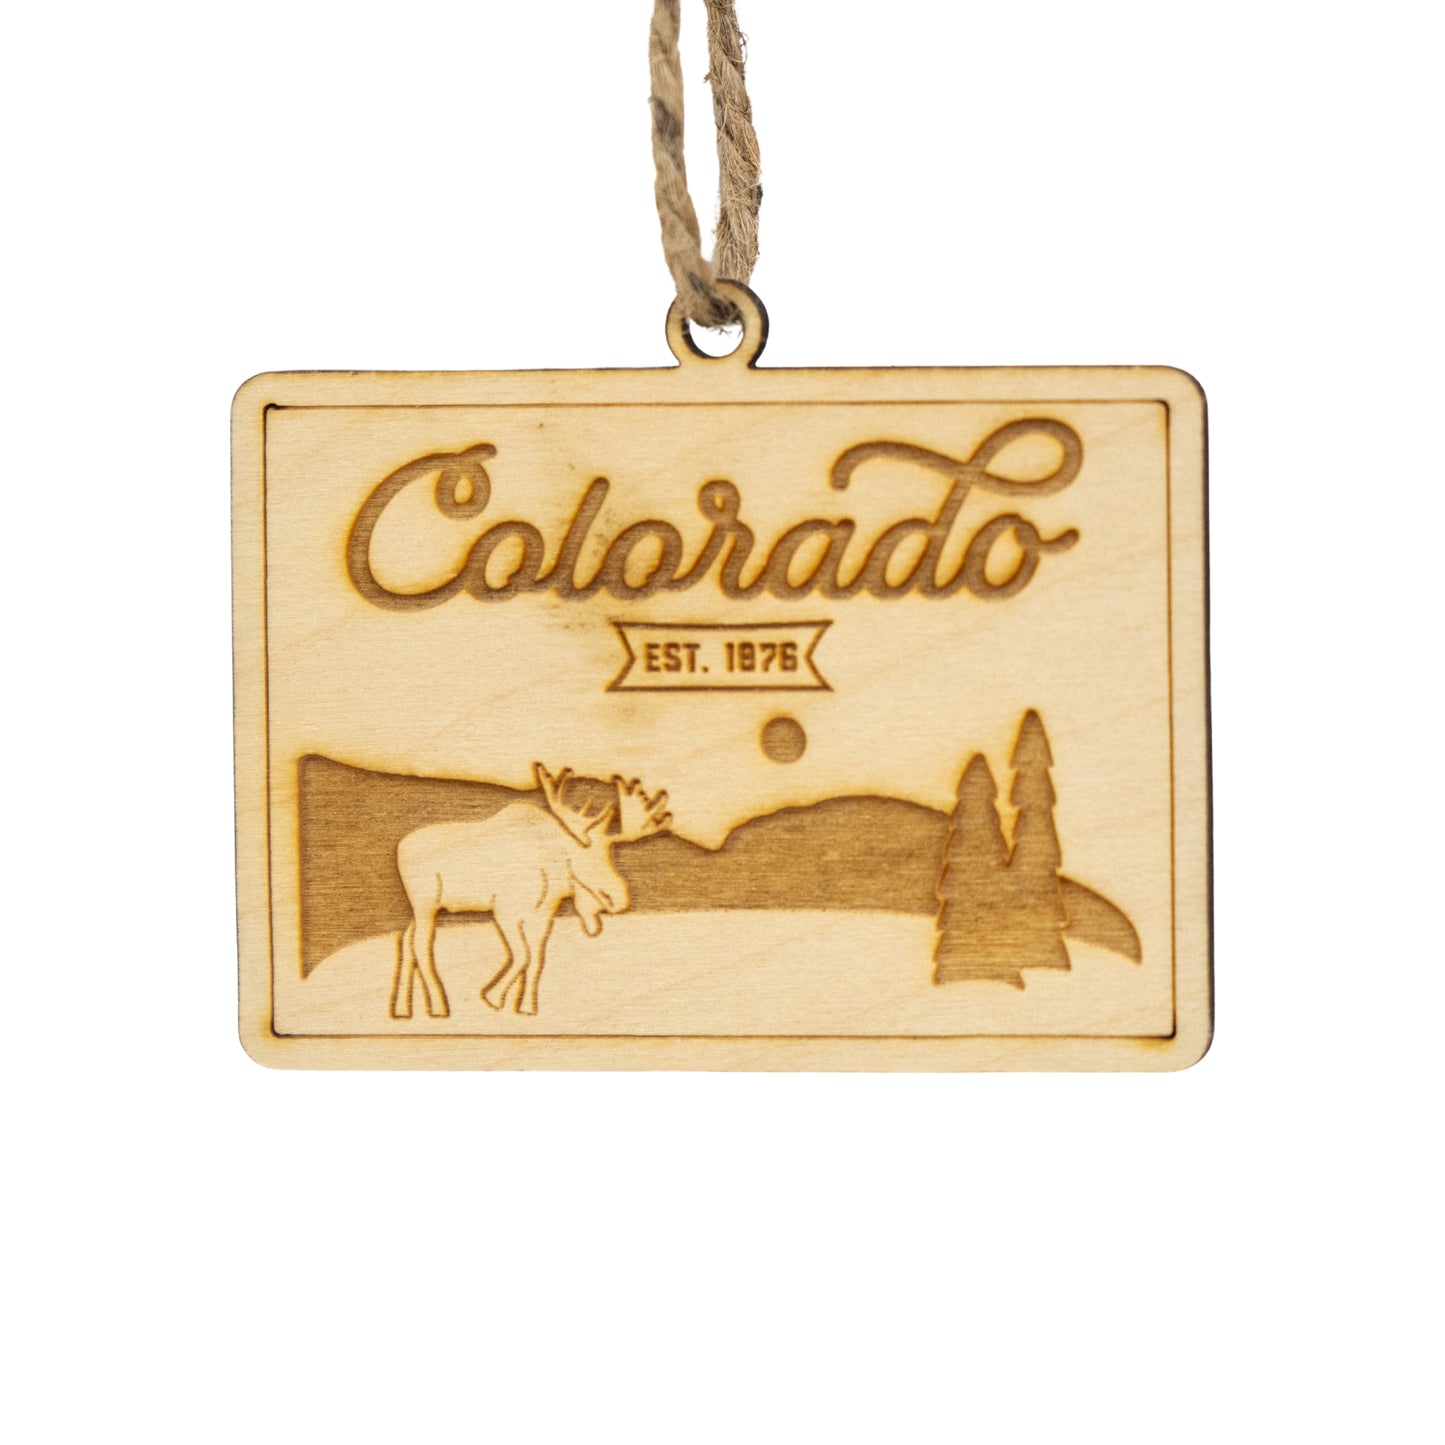 Colorado Home Town Ornament